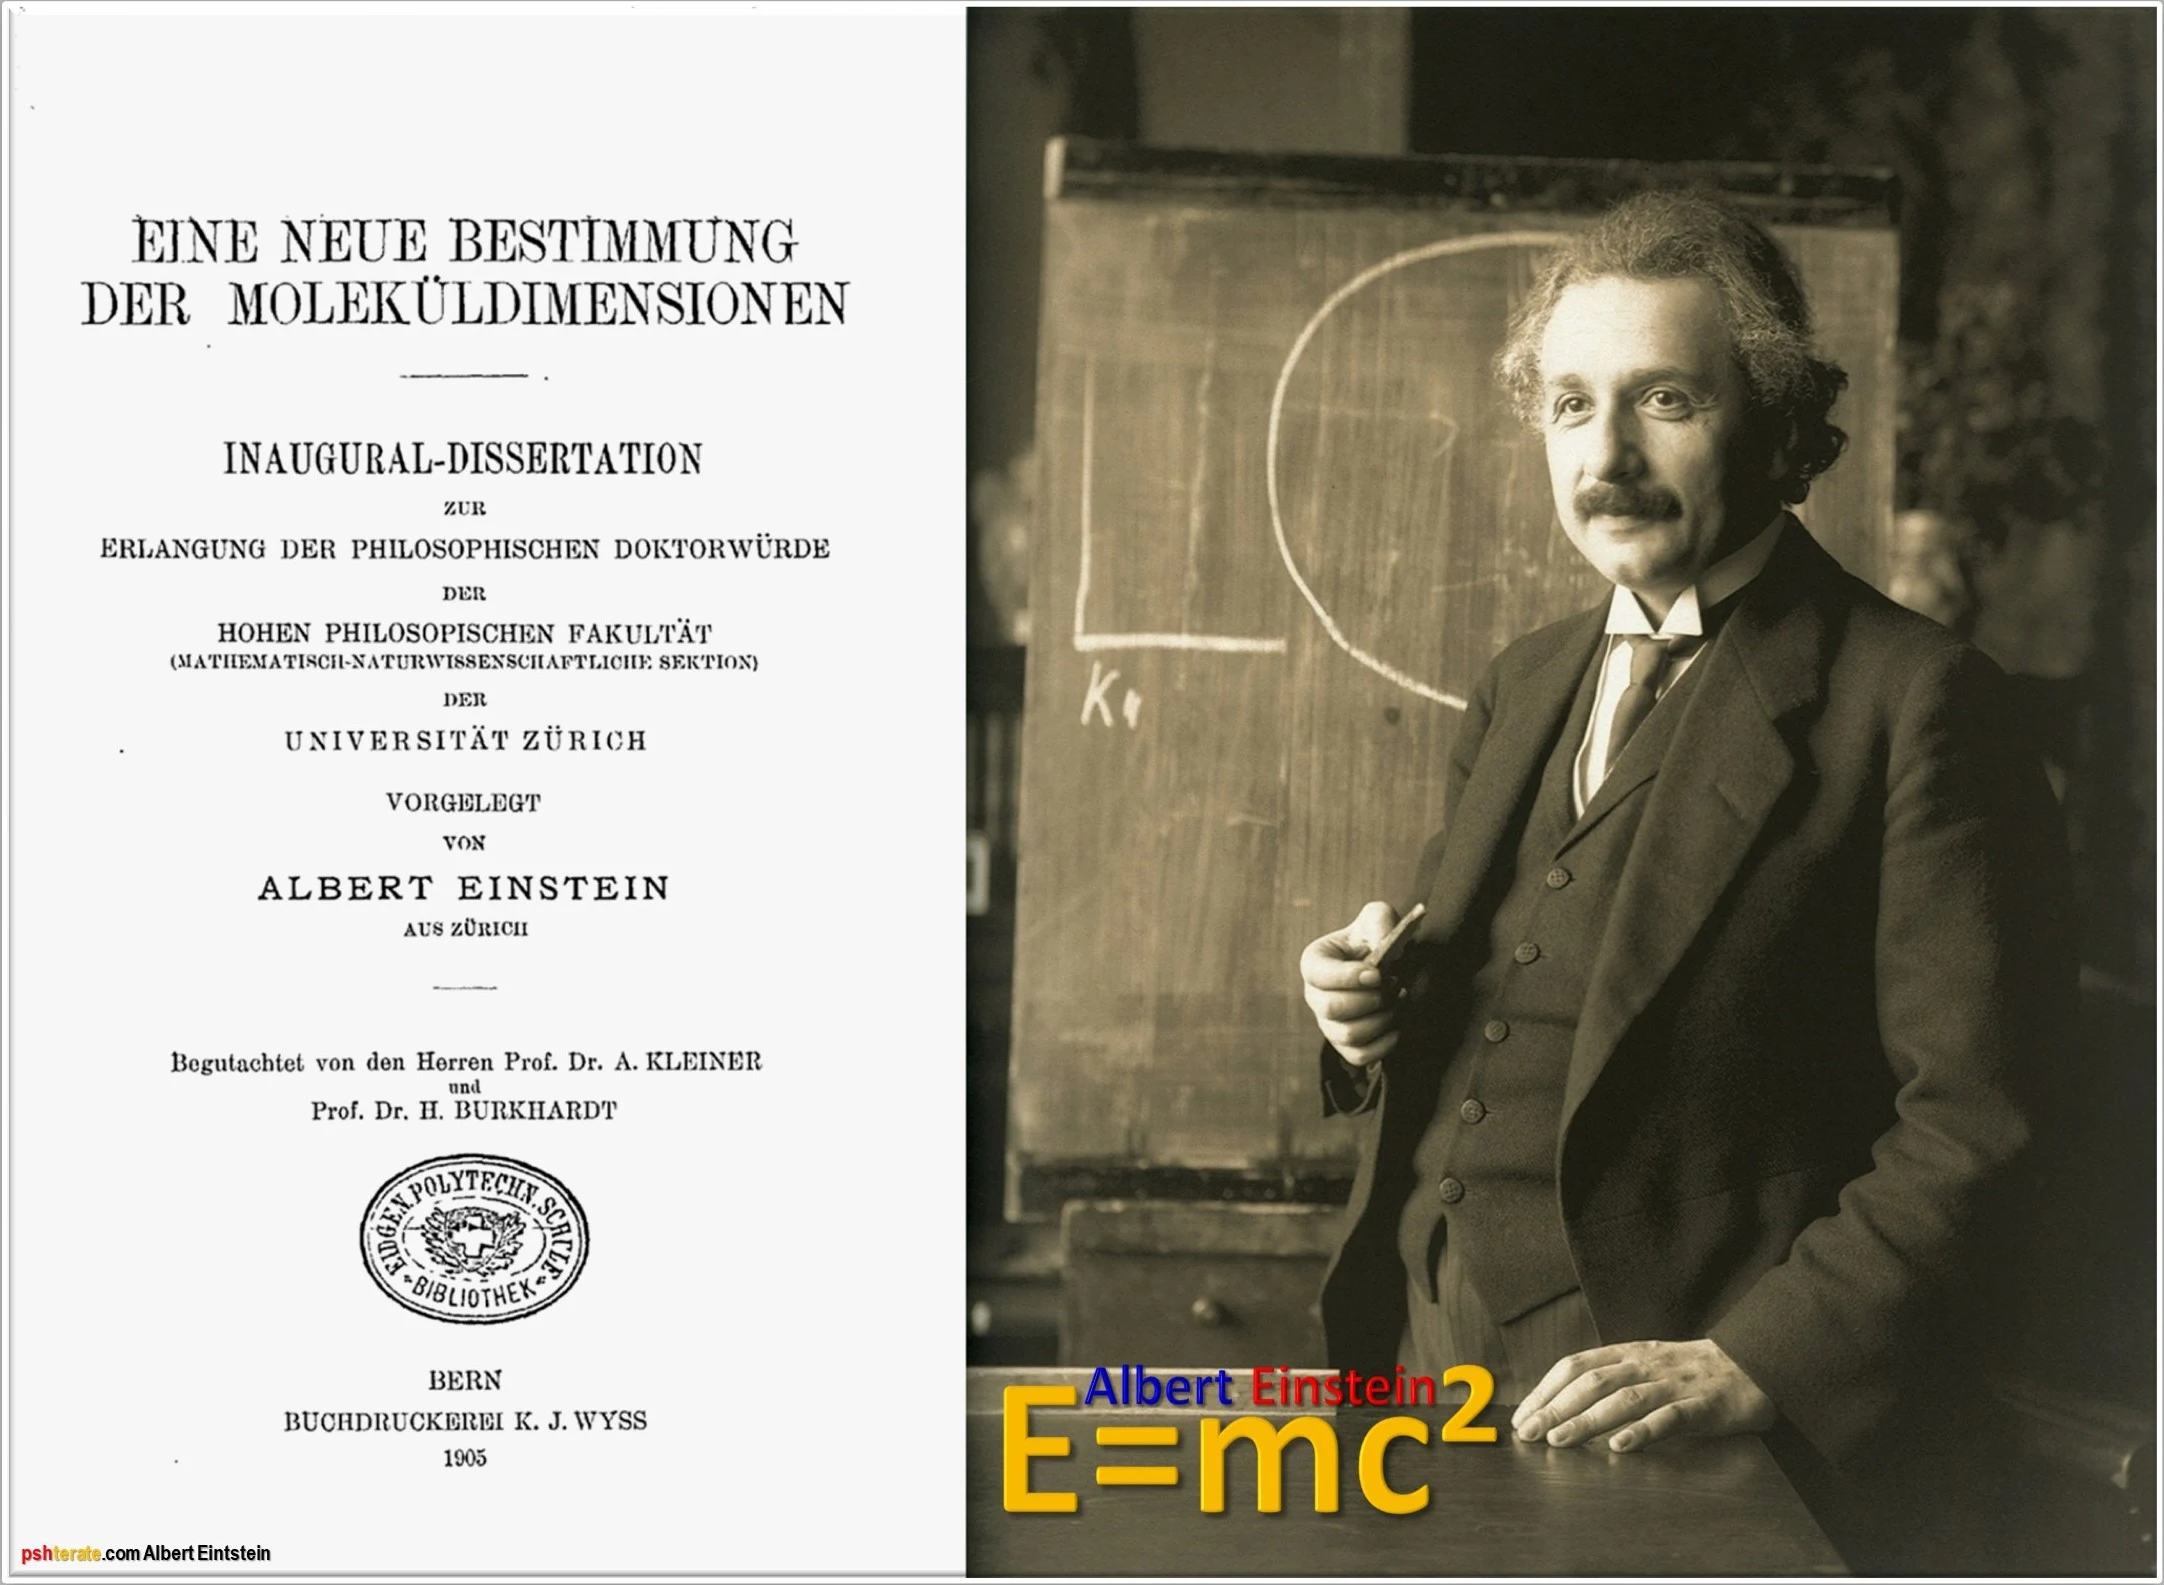 <a href="https://www.pshterate.com/"><img src="Albert Einstein E=MC2.jpg" alt="Albert Einstein: Ilmuwan yang Menggagas Teori Relativitas"></a>